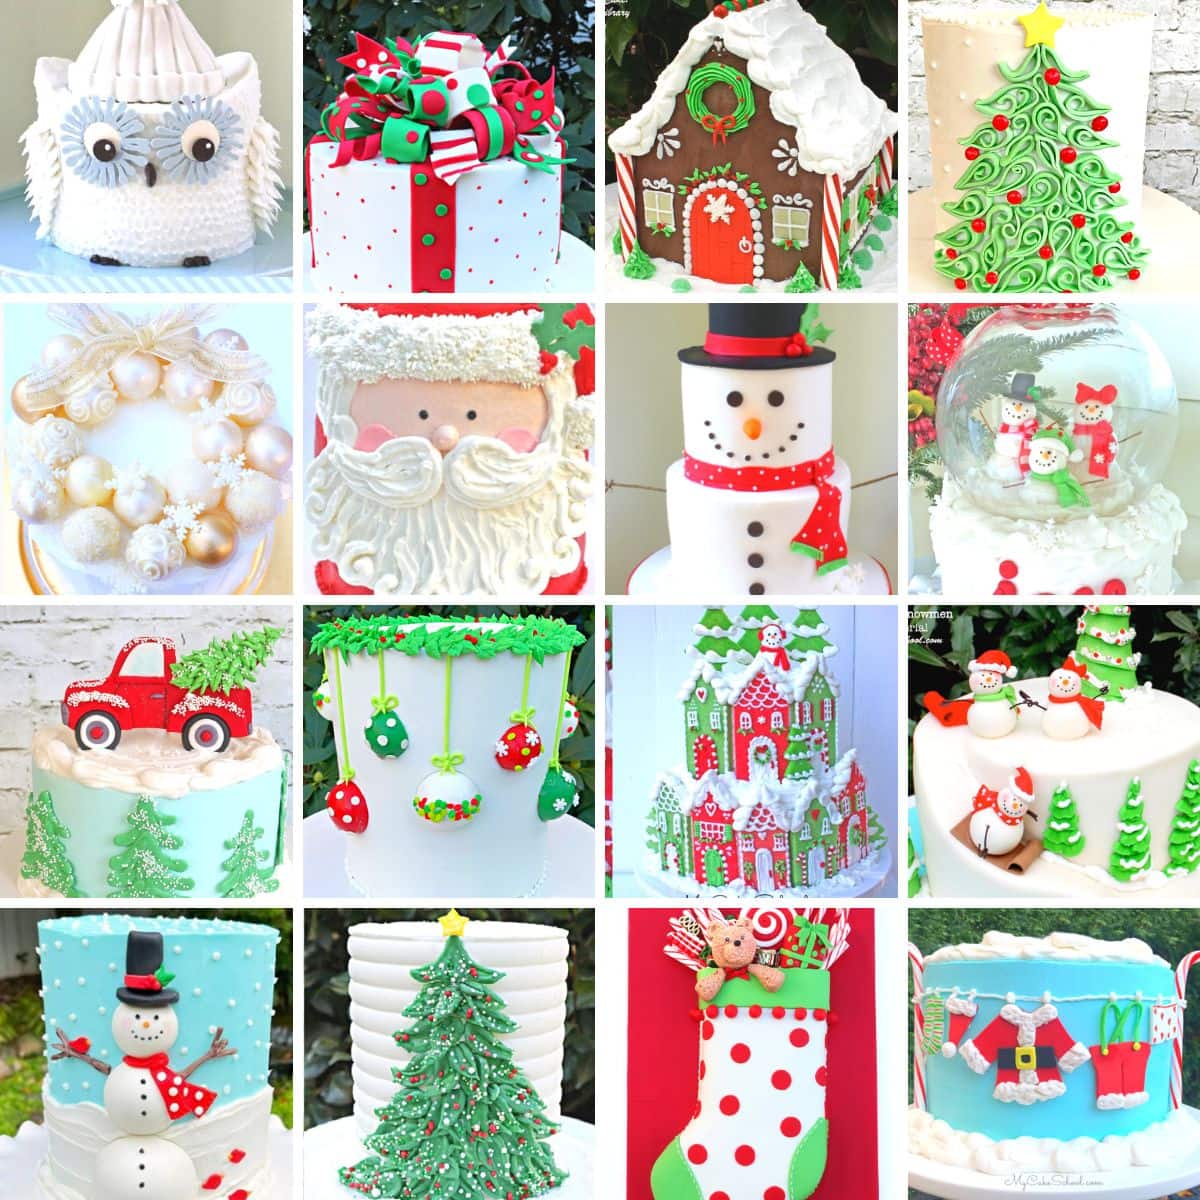 https://www.mycakeschool.com/images/2016/12/Christmas-and-Winter-Cake-Tutorials-photo.jpg